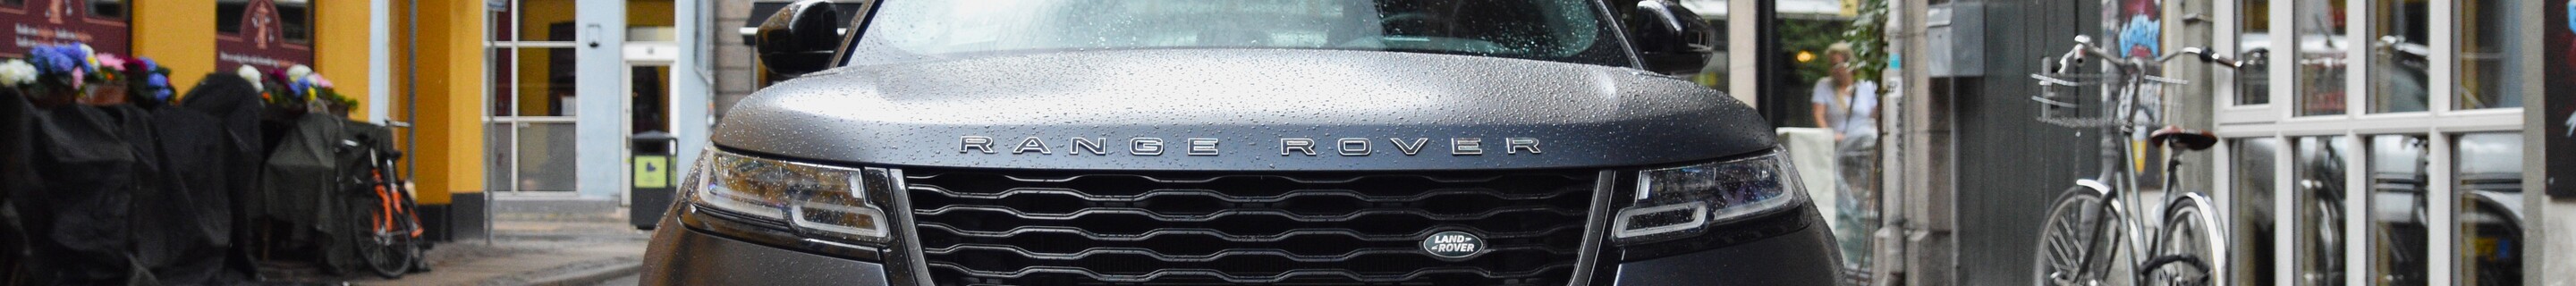 Land Rover Range Rover Velar SVAutobiography